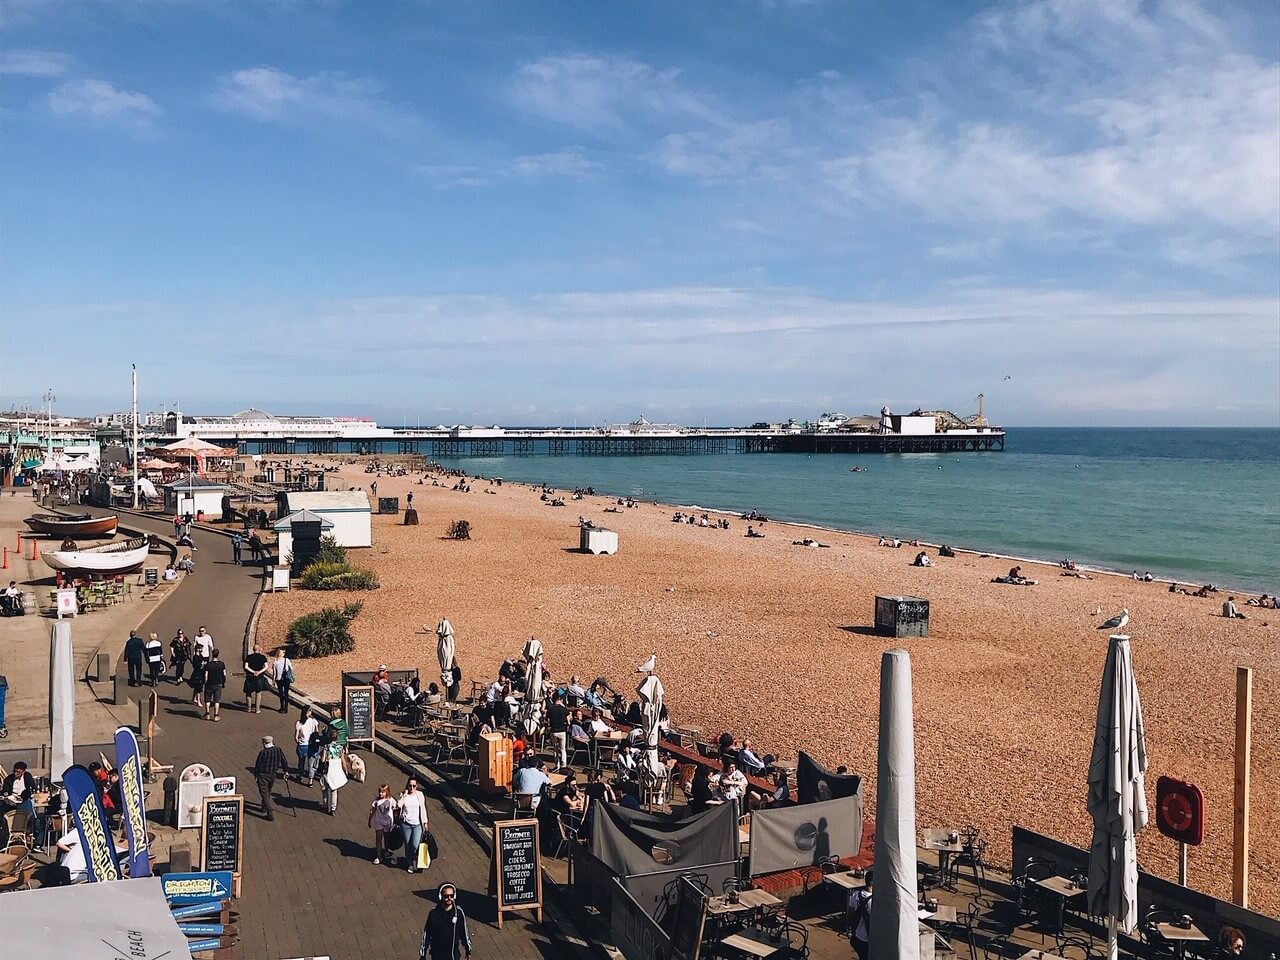  Day trip to Brighton: the beach